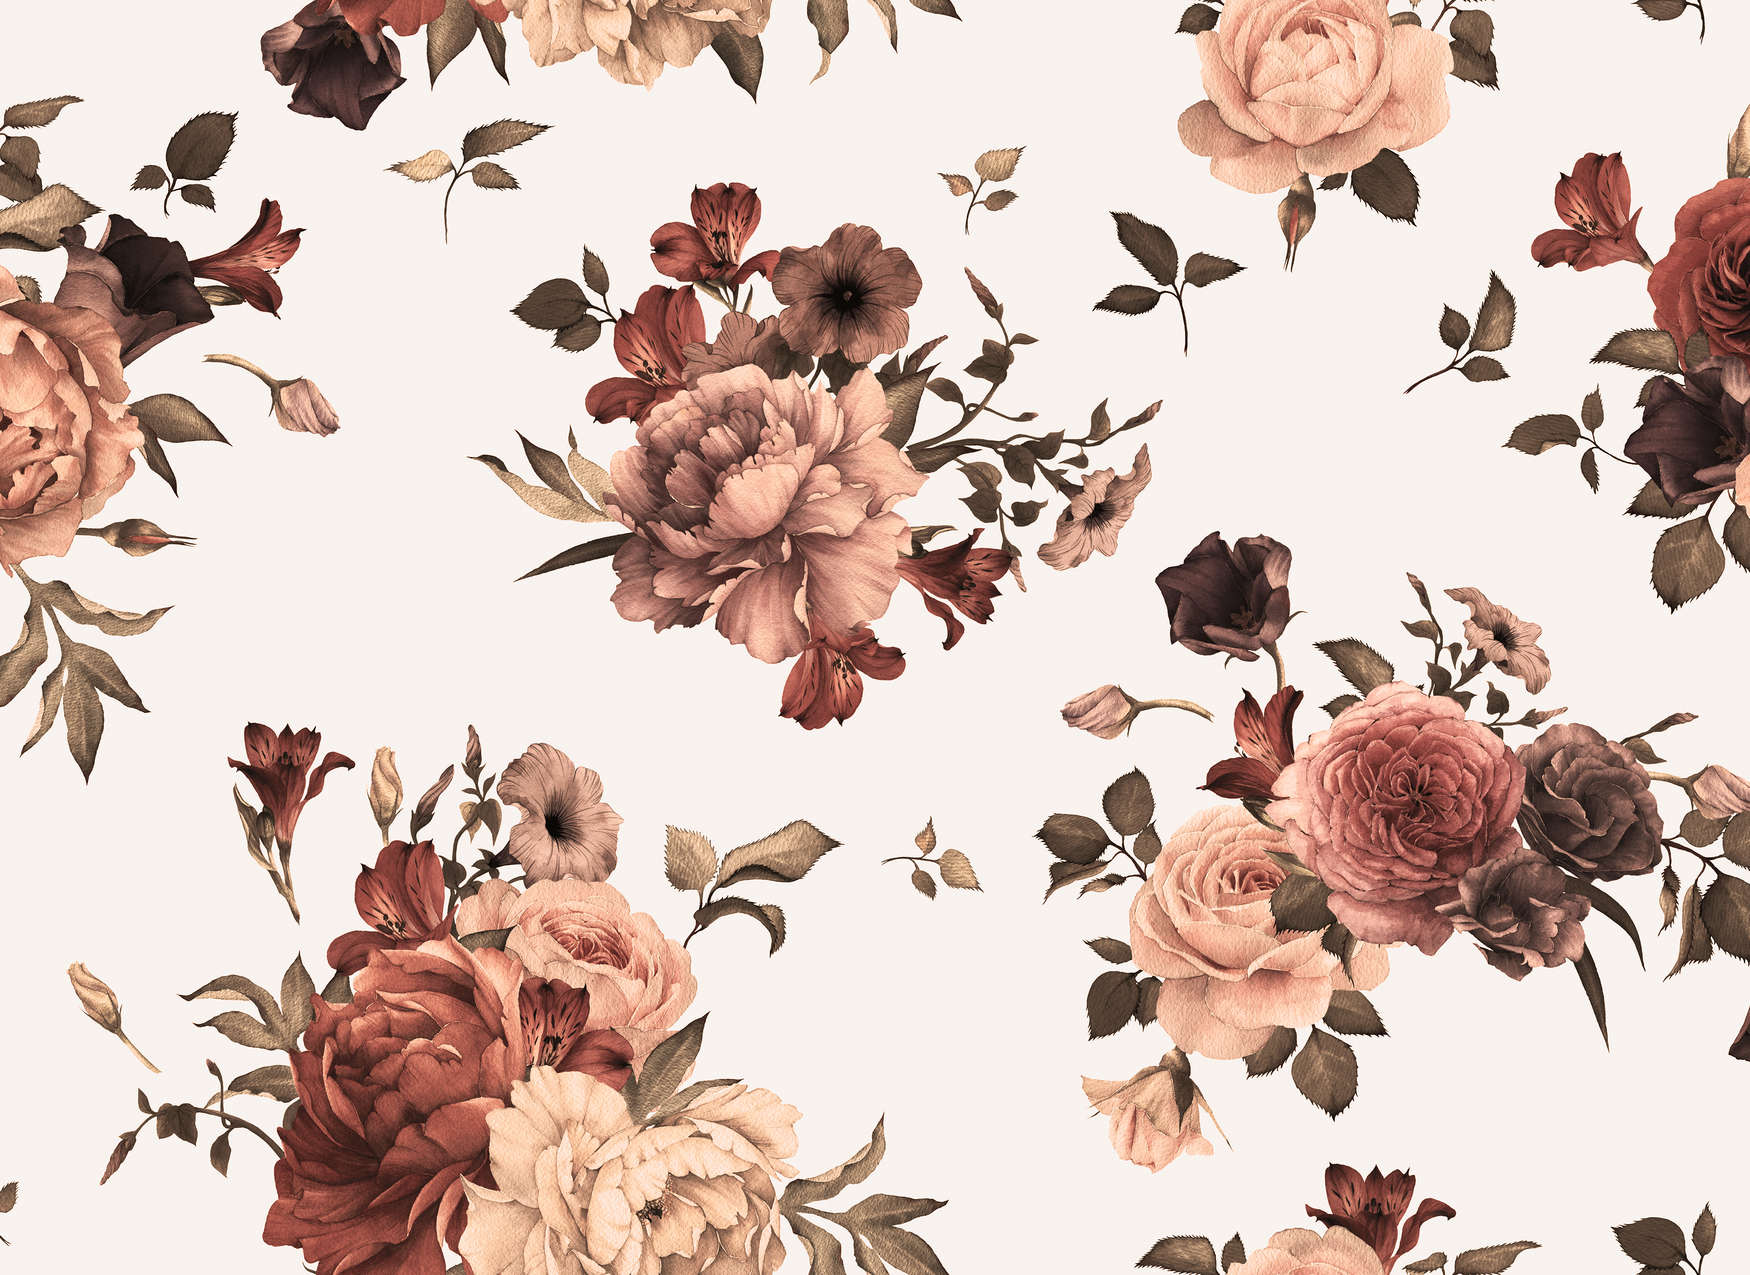             Flowers Wallpaper Romantic Design - Pink, White, Brown
        